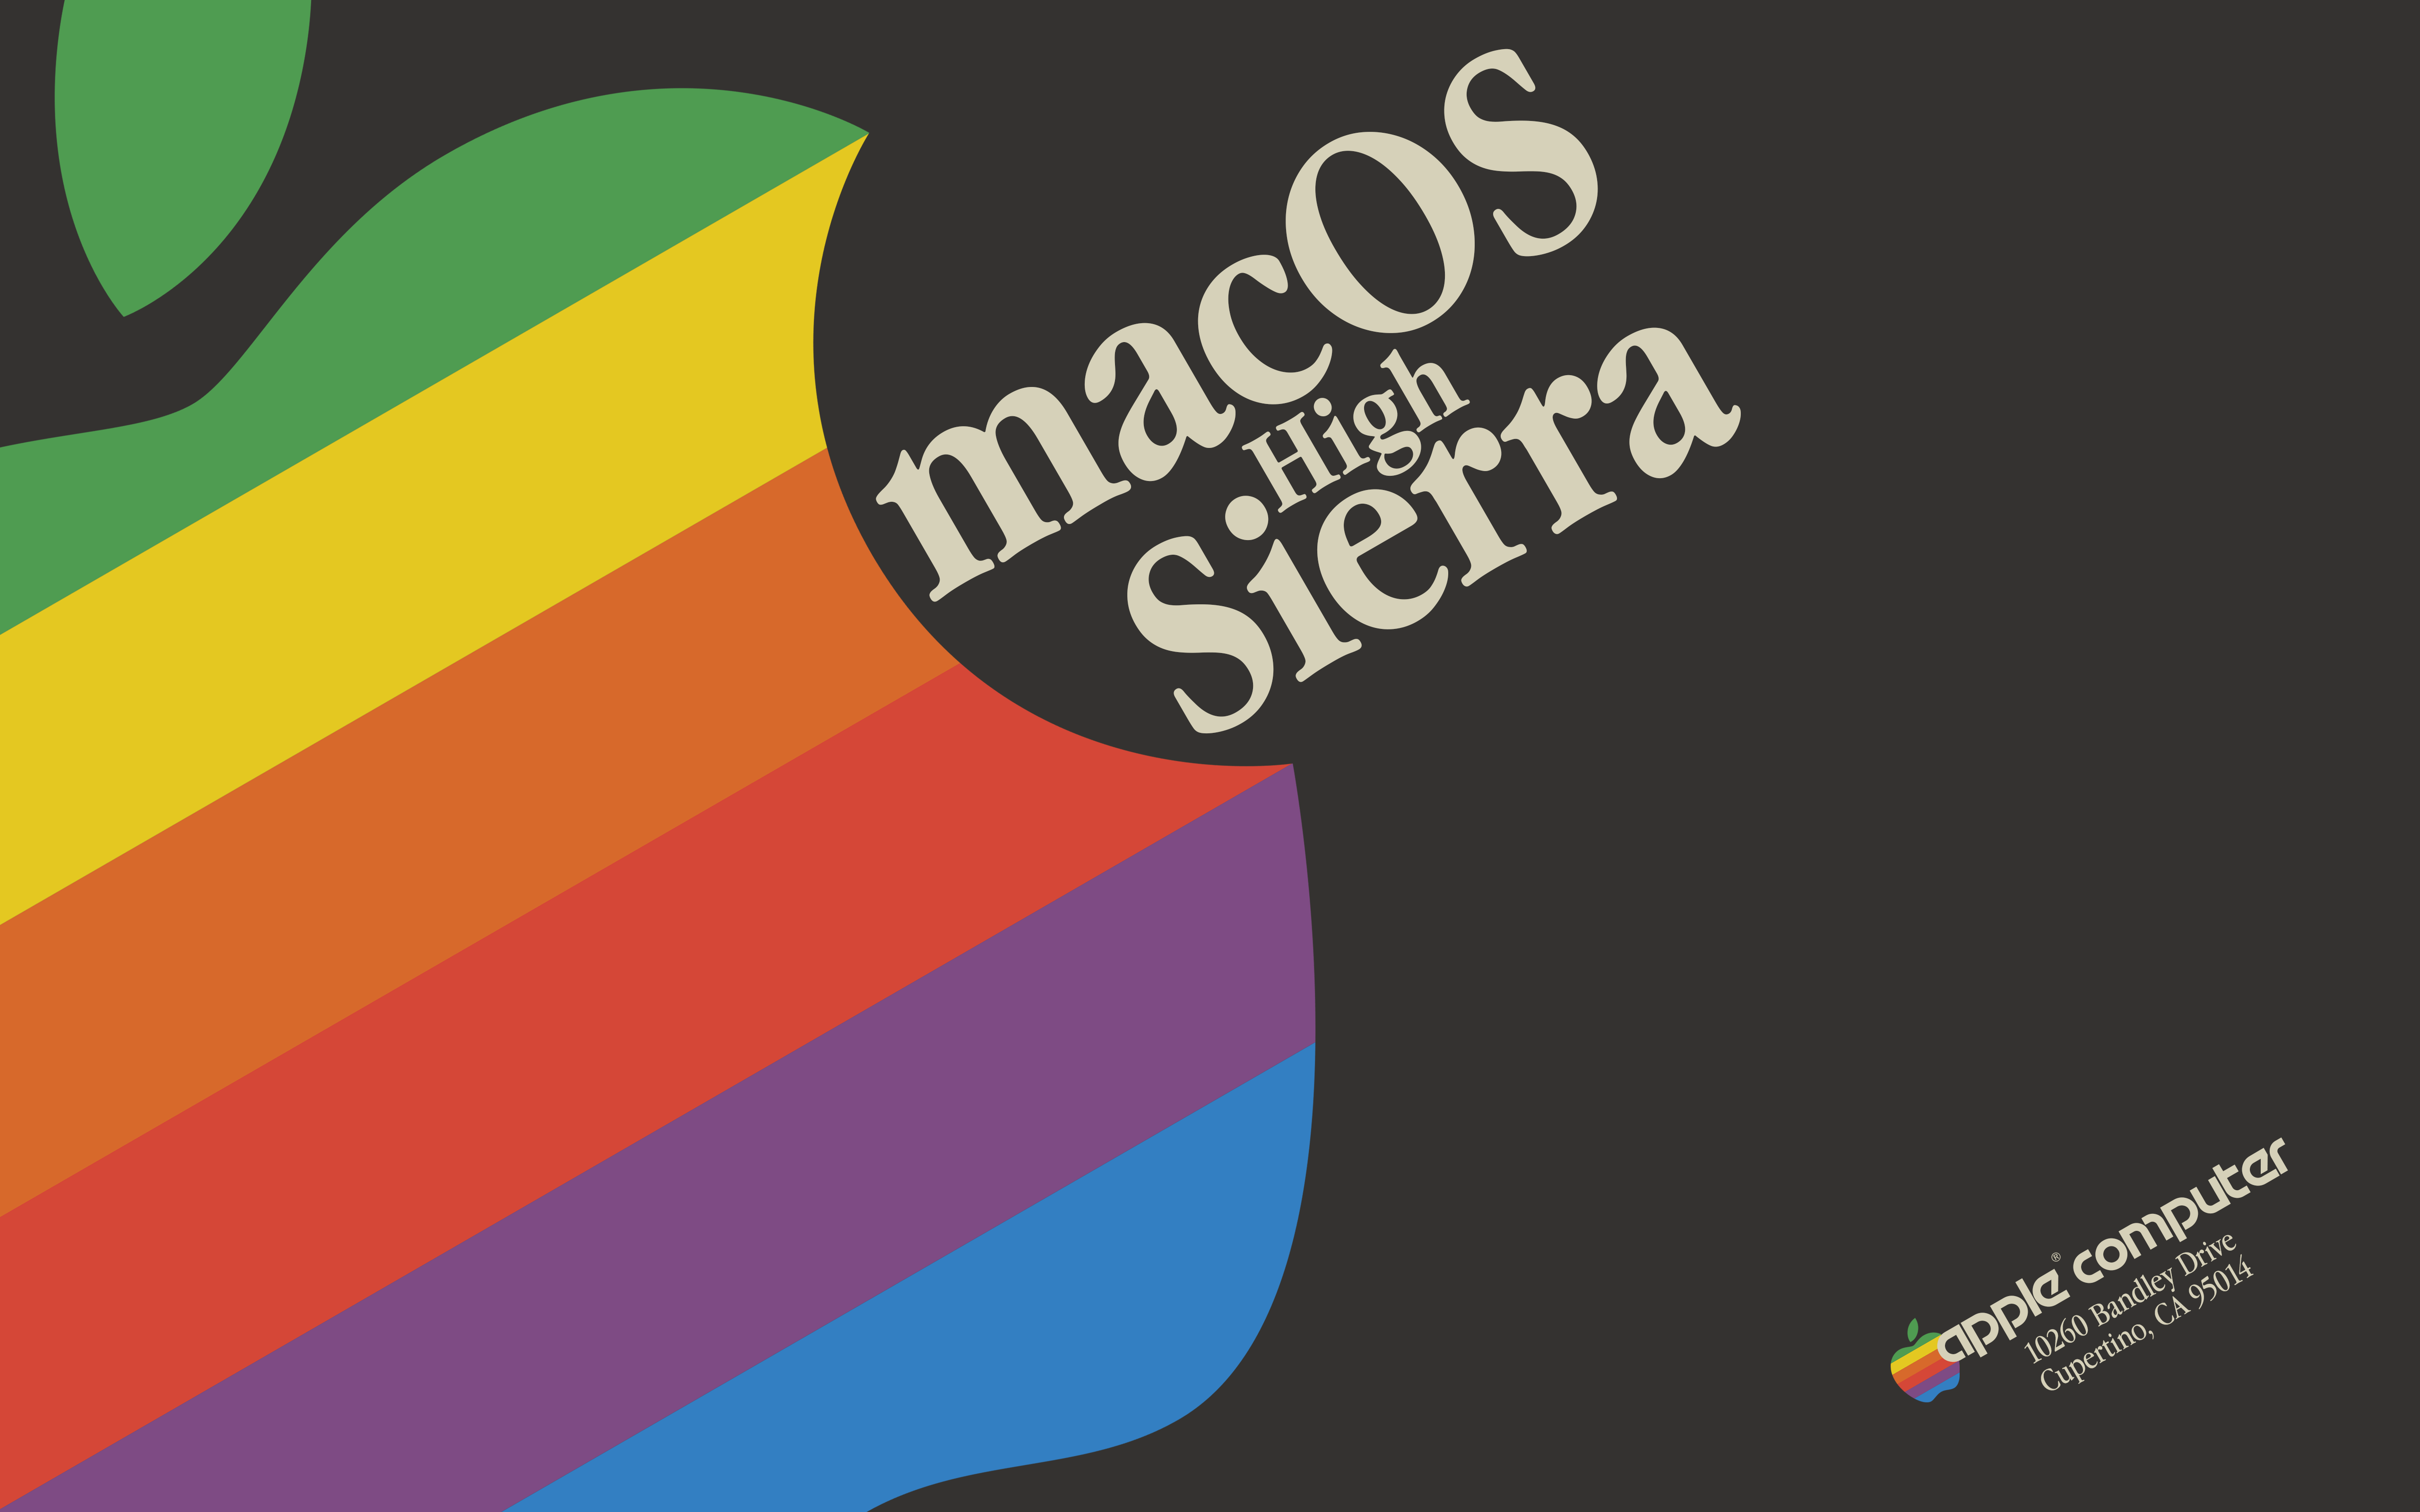 MacOS High Sierra Retro 70s Retina 4k Wallpaper